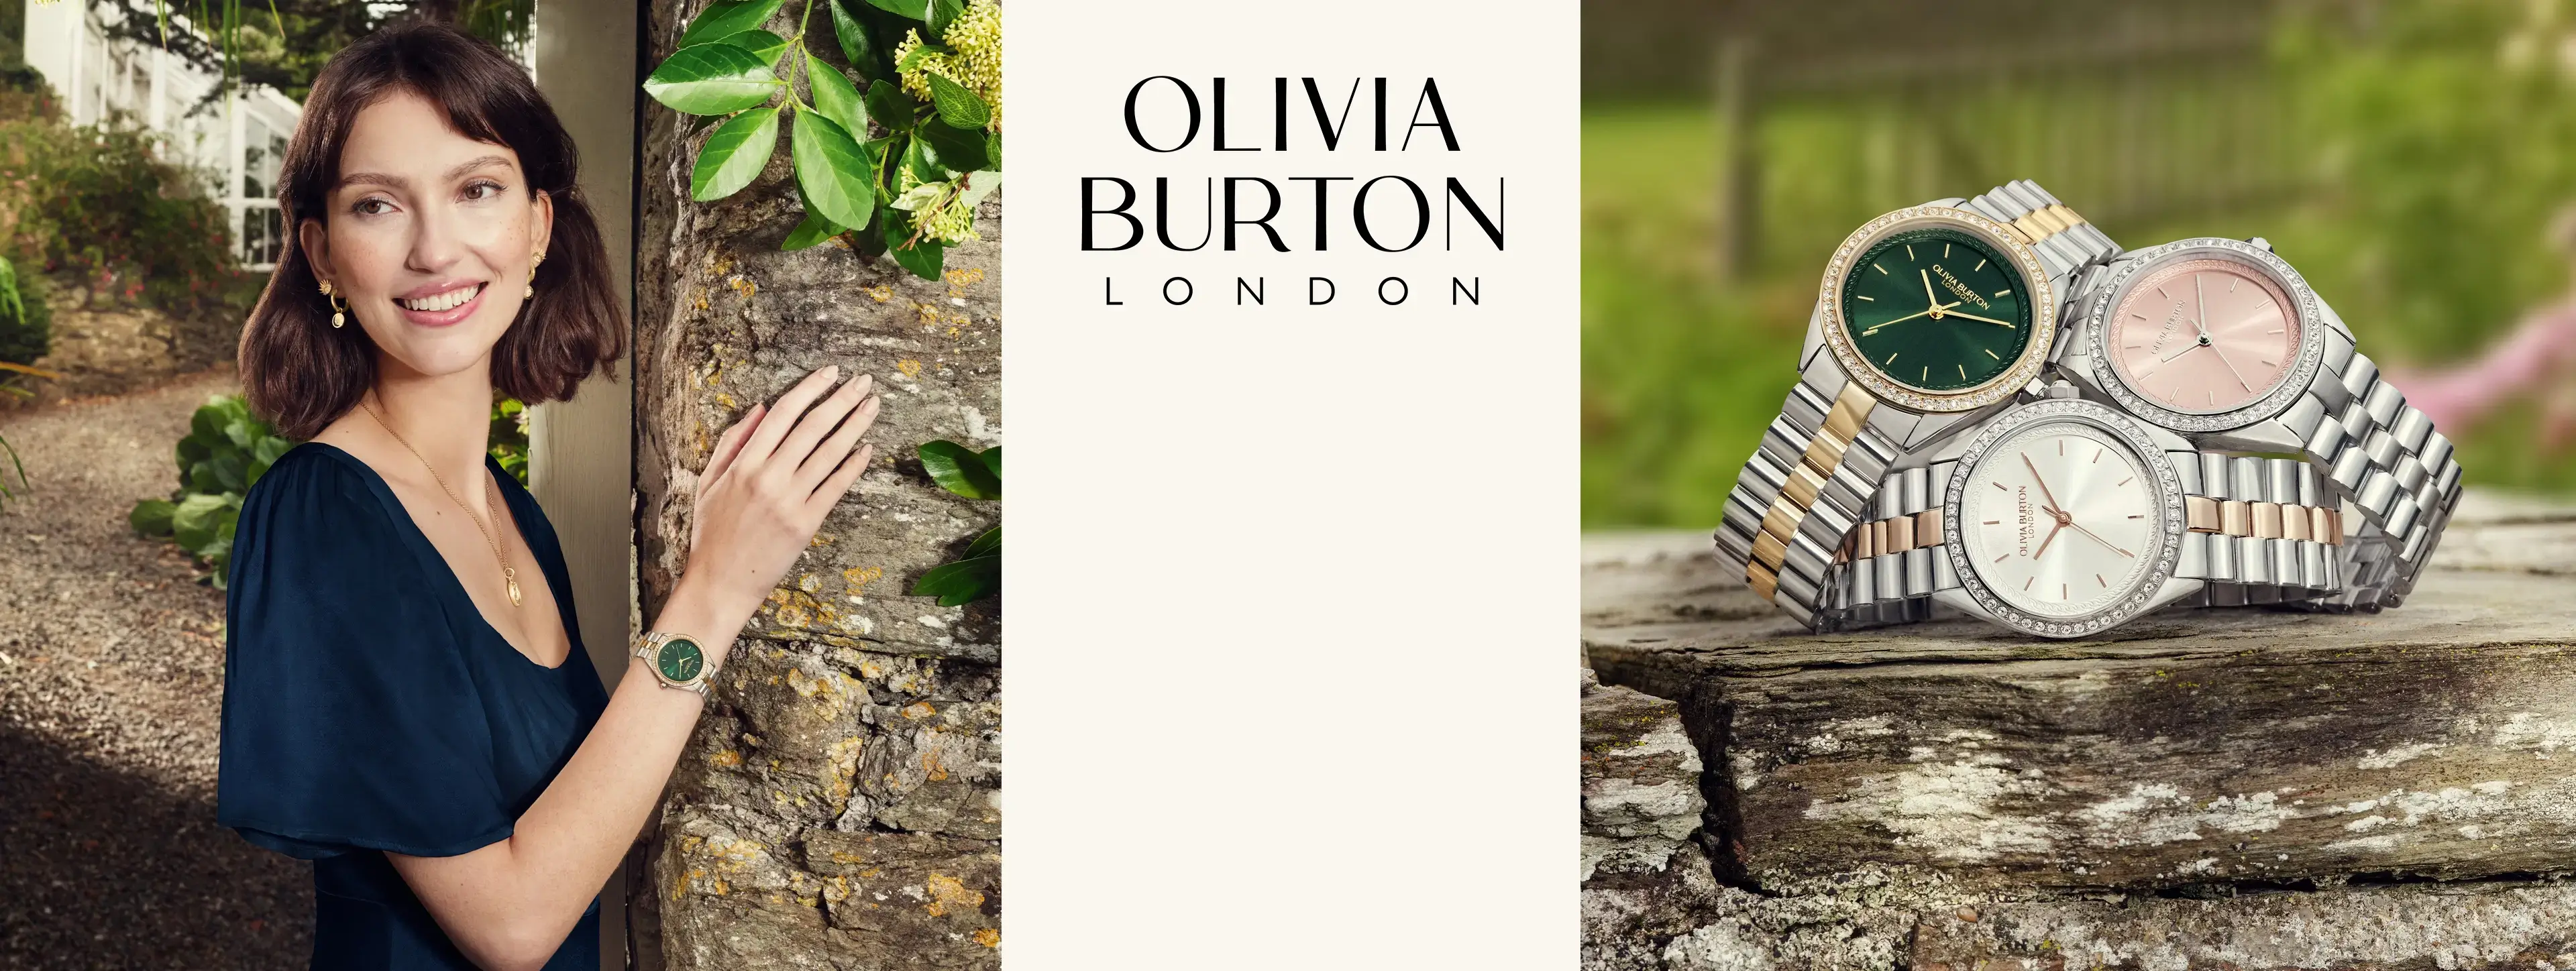 Are Olivia Burton watches good? - Quora